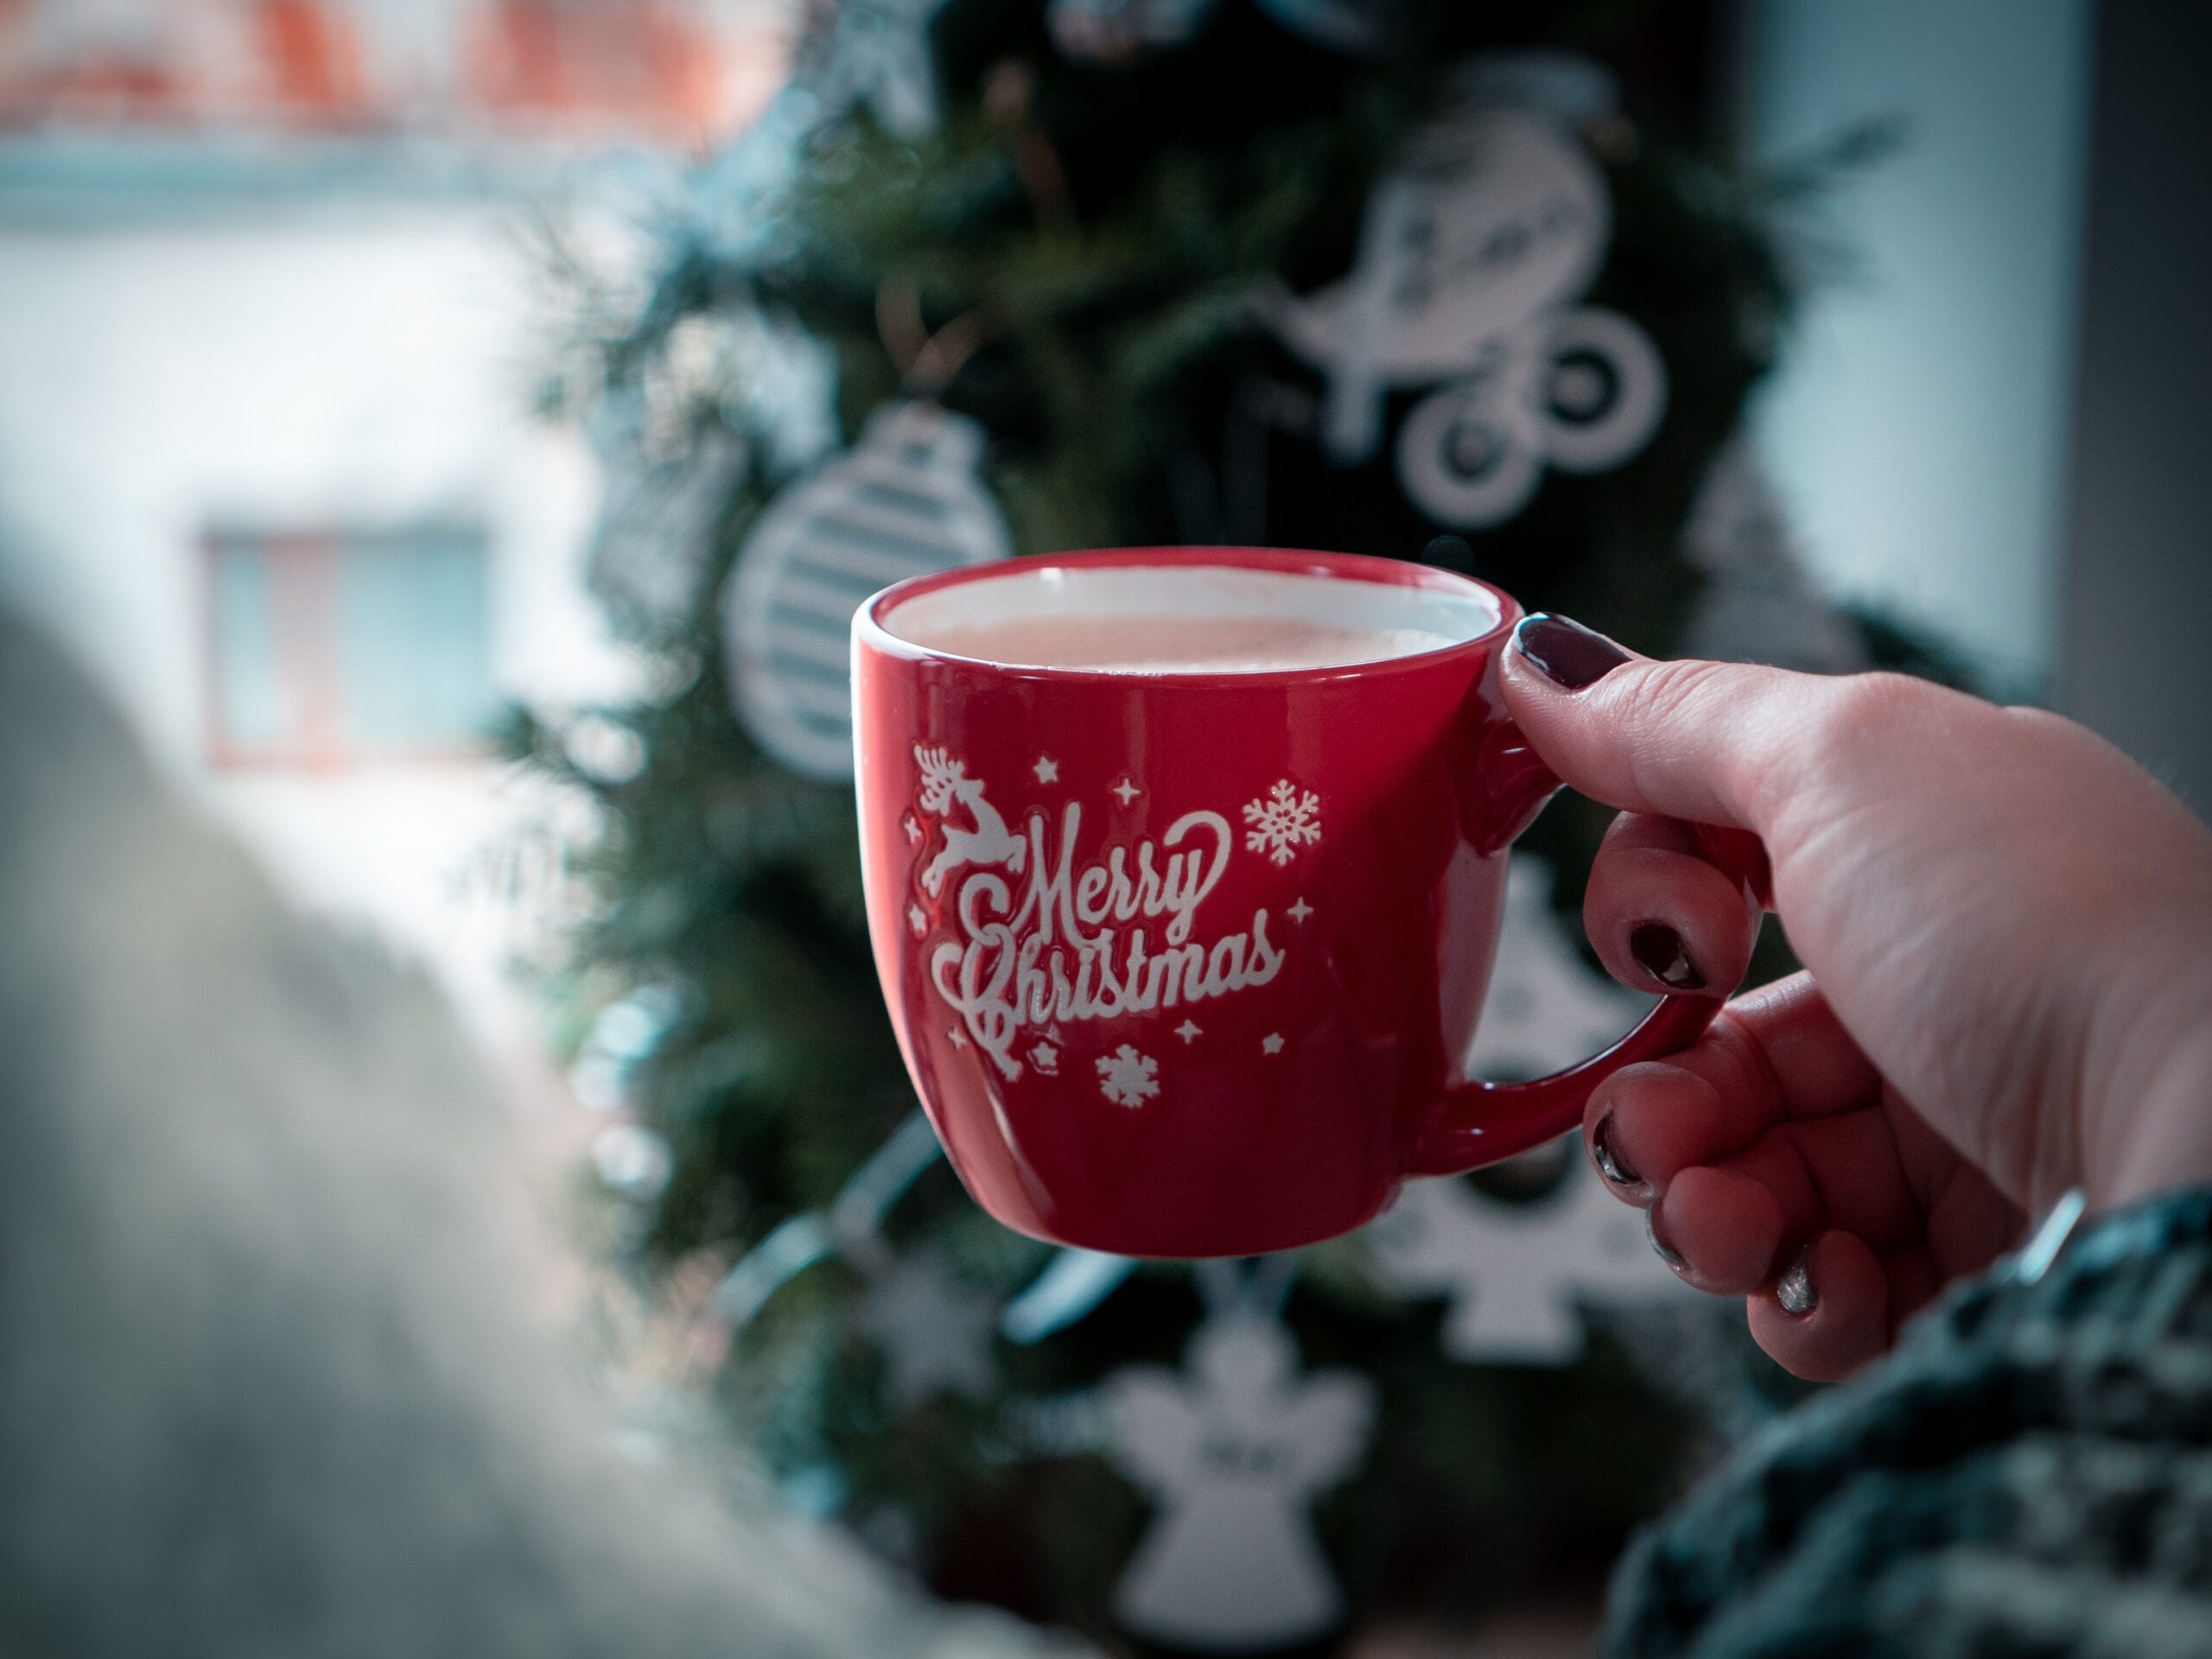 Woman drinking from Merry Christmas mug